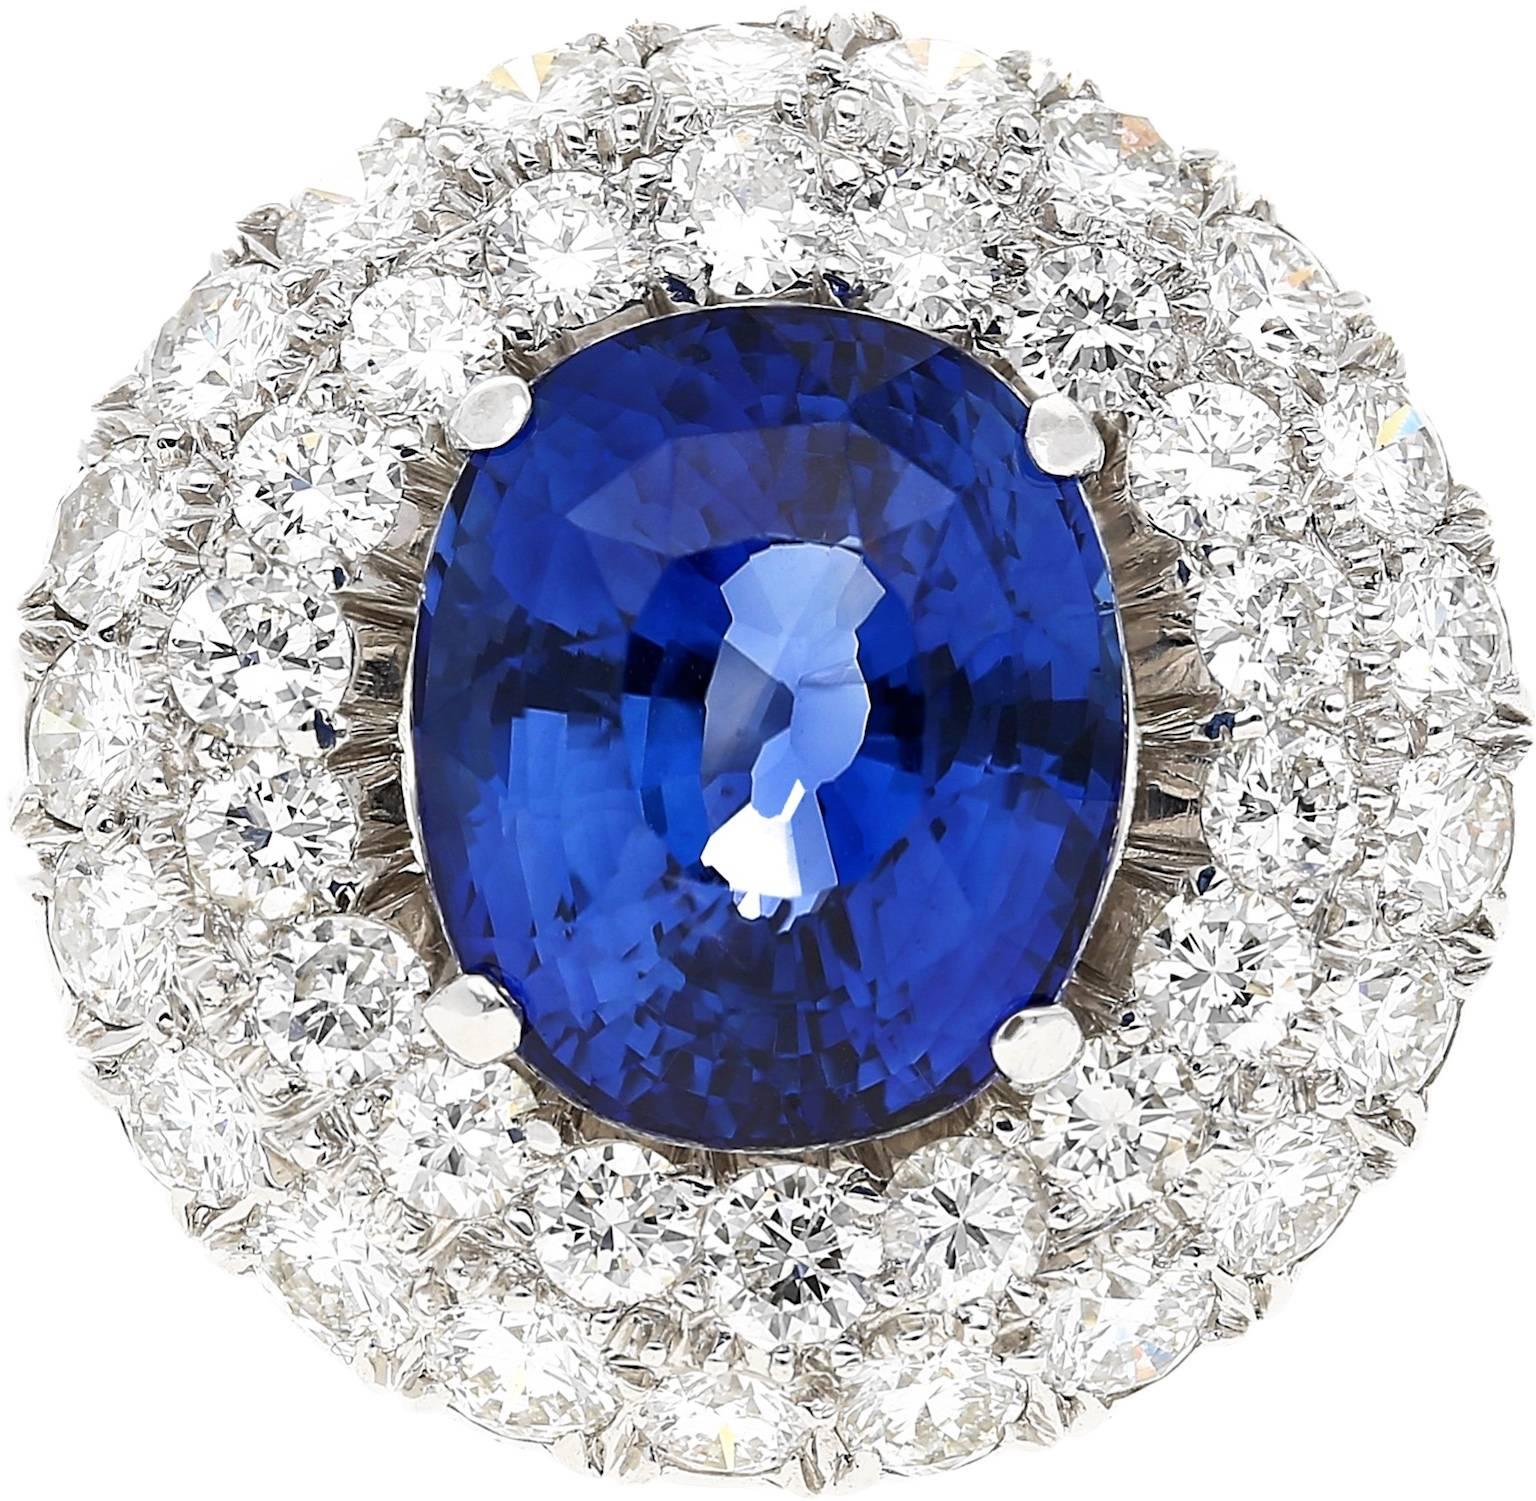 IGI Certified Ceylon Sri-Lanka Sapphire
7.52 carat total weight (1.50 carat diamond)
Set in Platinum